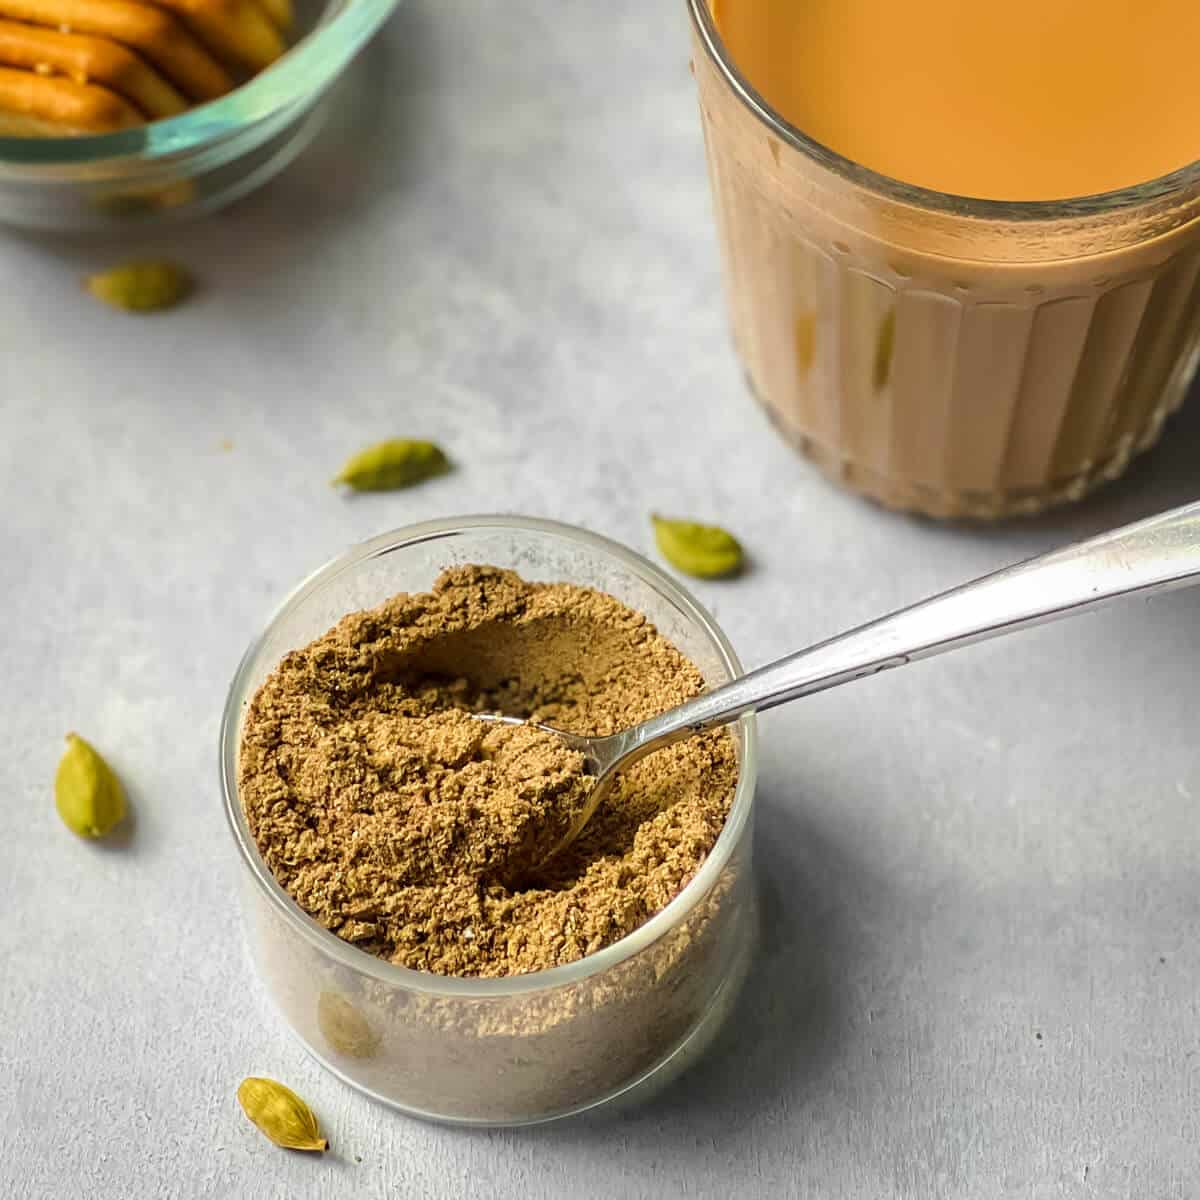 Homemade Chai Masala Powder